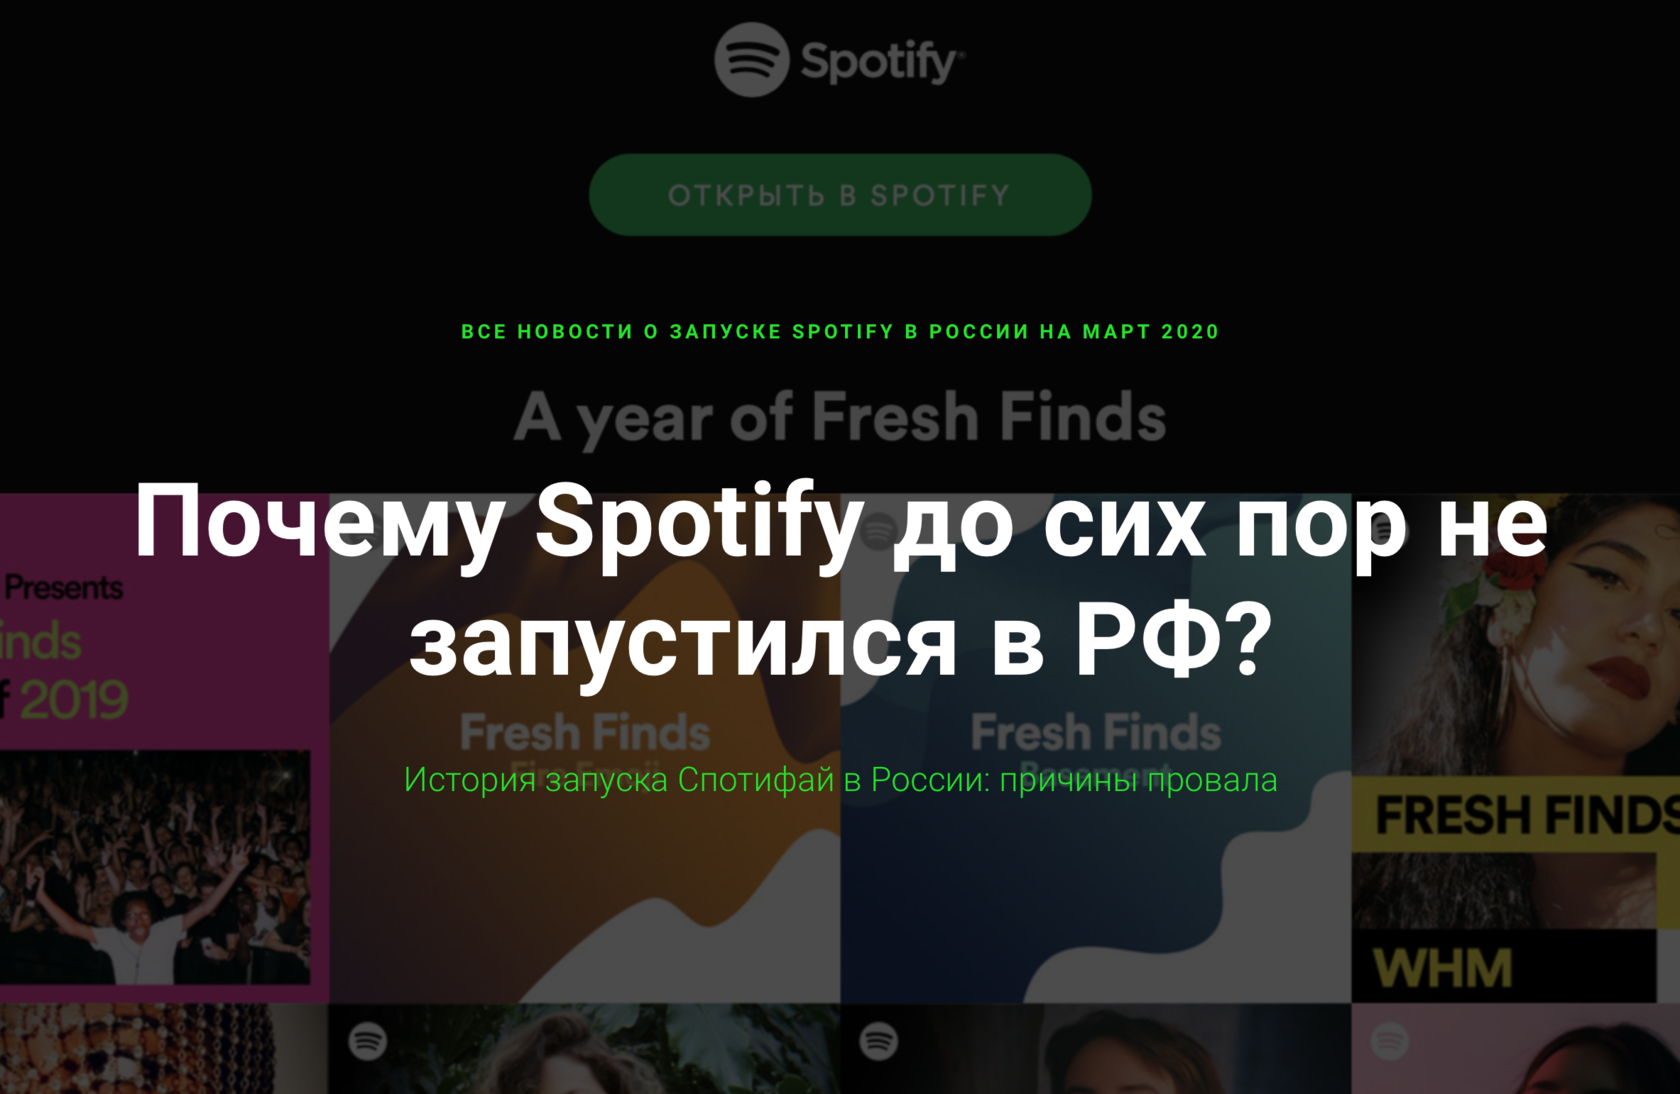 Спотифай в рф. Spotify в России. Spotify реклама в России. Spotify в России 2022. Спотифай в России запустился.